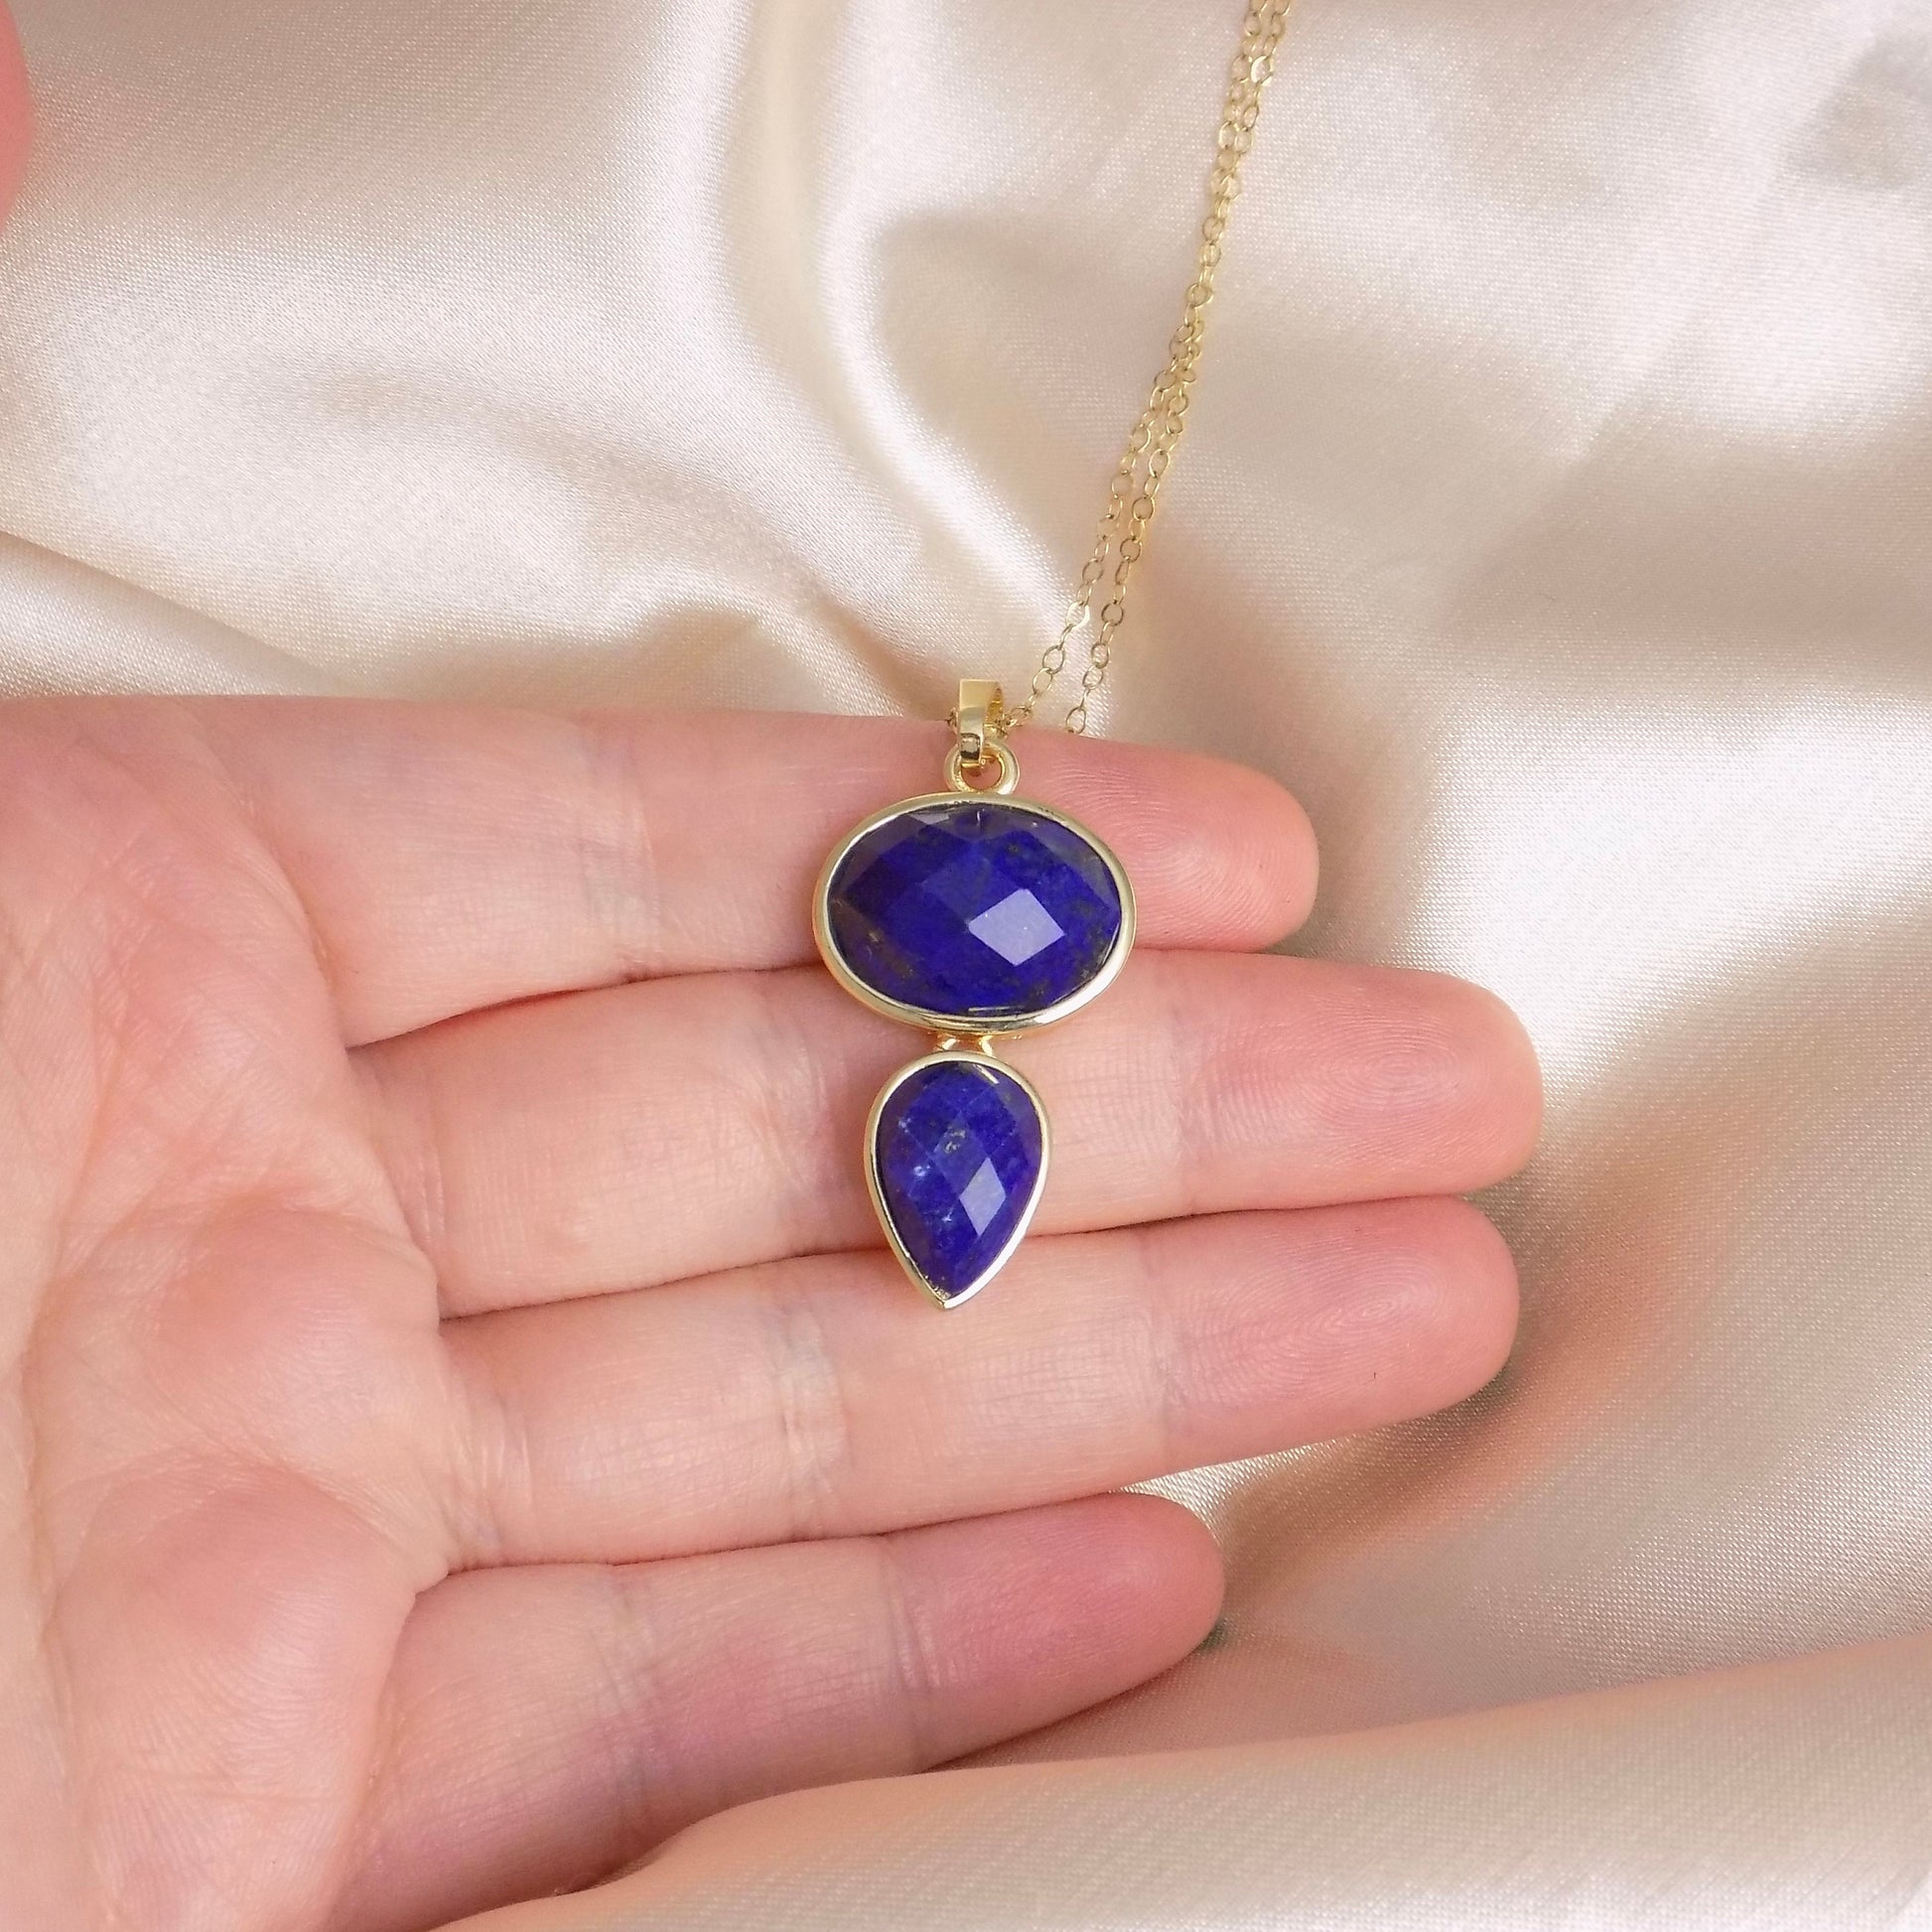 Unique Lapis Lazuli Pendant Necklace Gold, Gift For Mom, M7-51